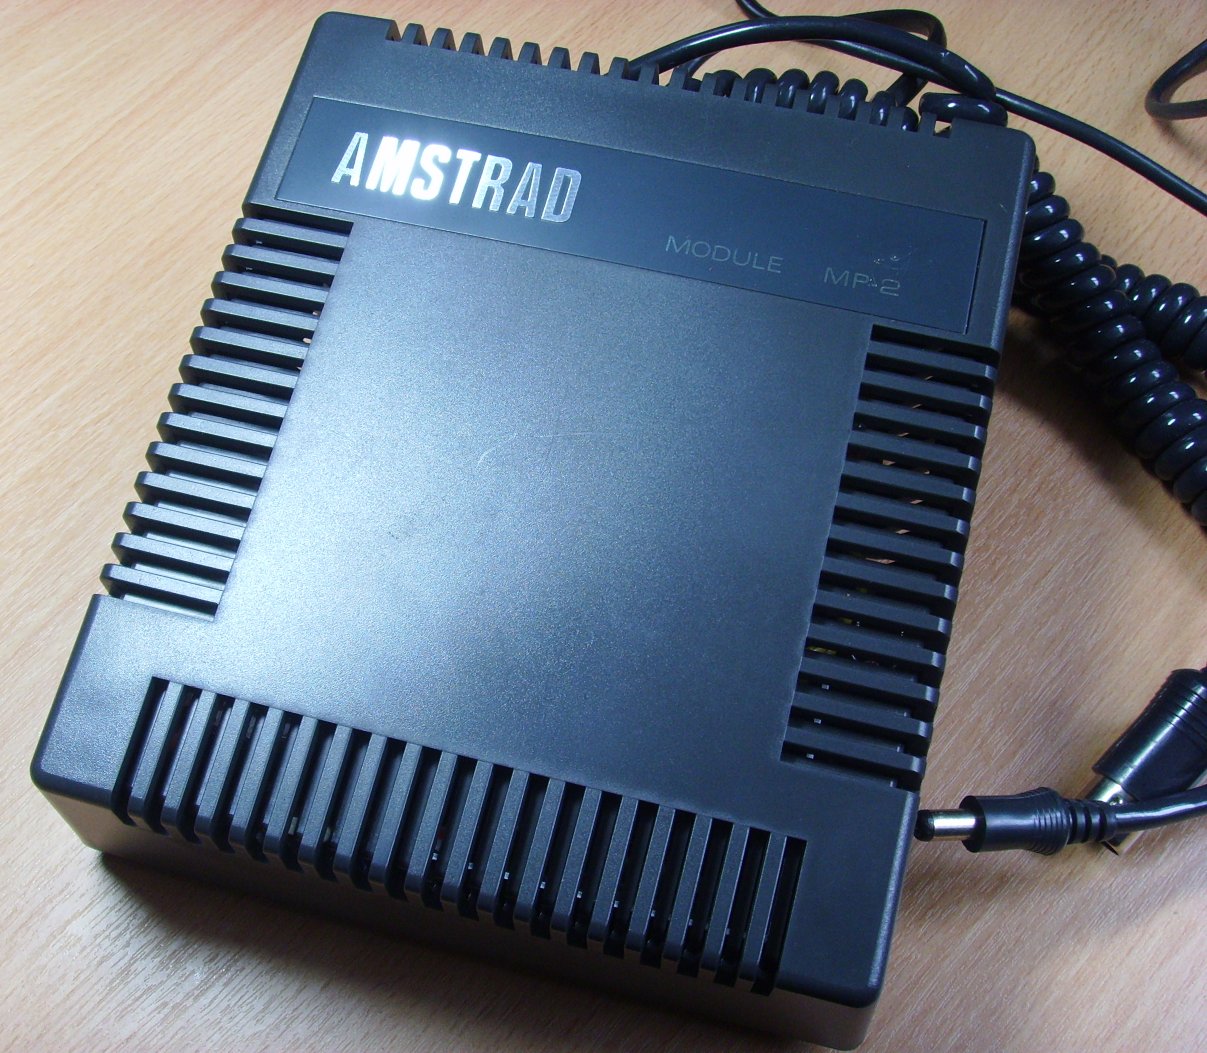 Amstrad CPC464 - MP-2 Modulator/Power Supply